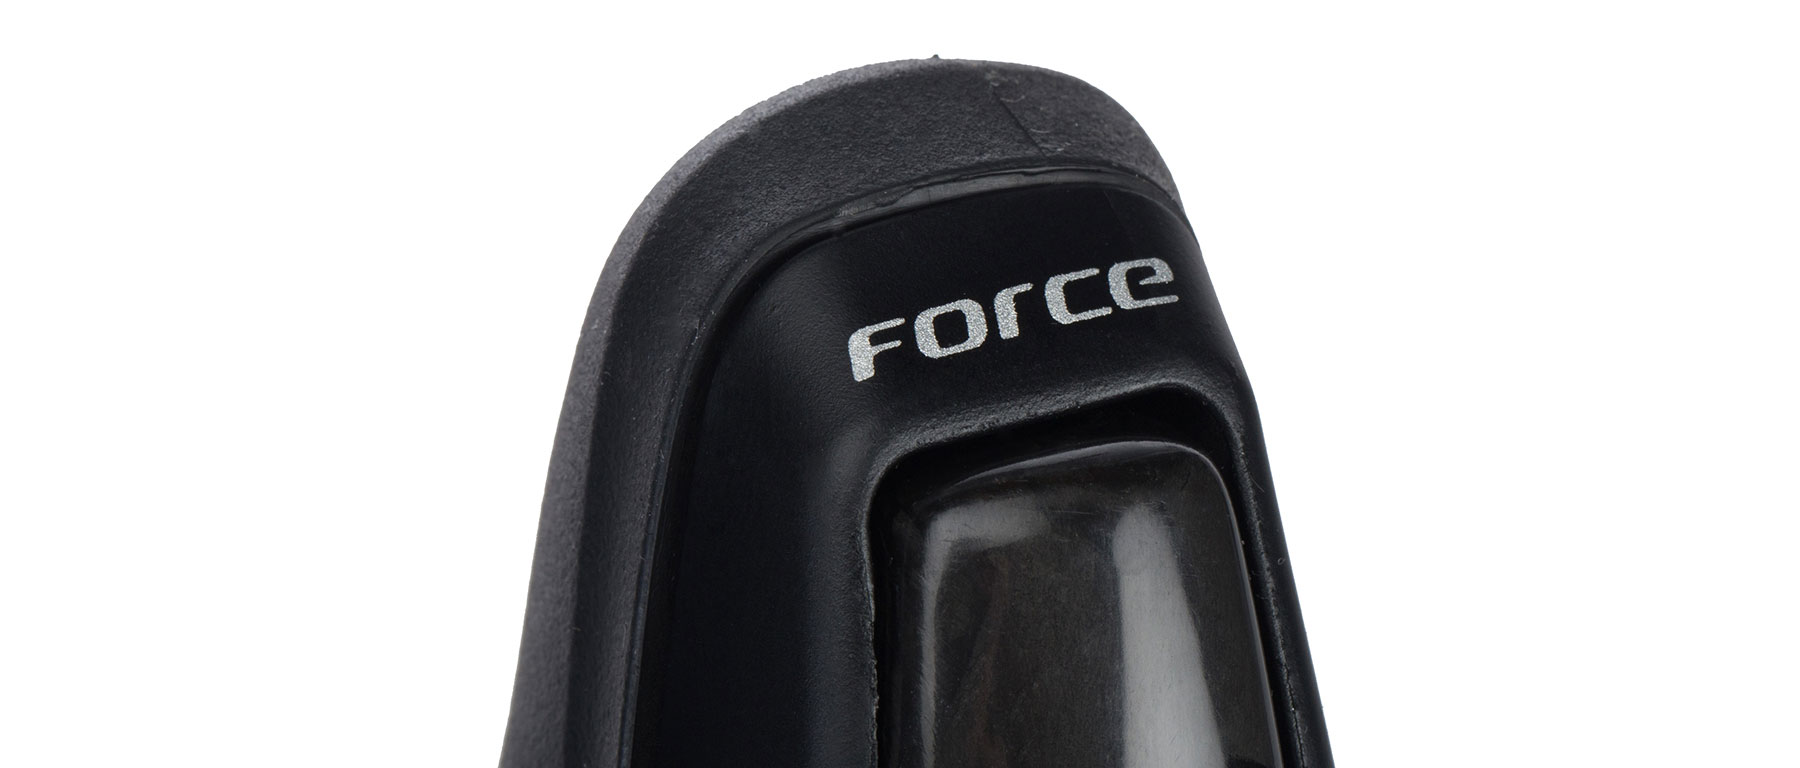 SRAM Force 22 11-Speed Shifter